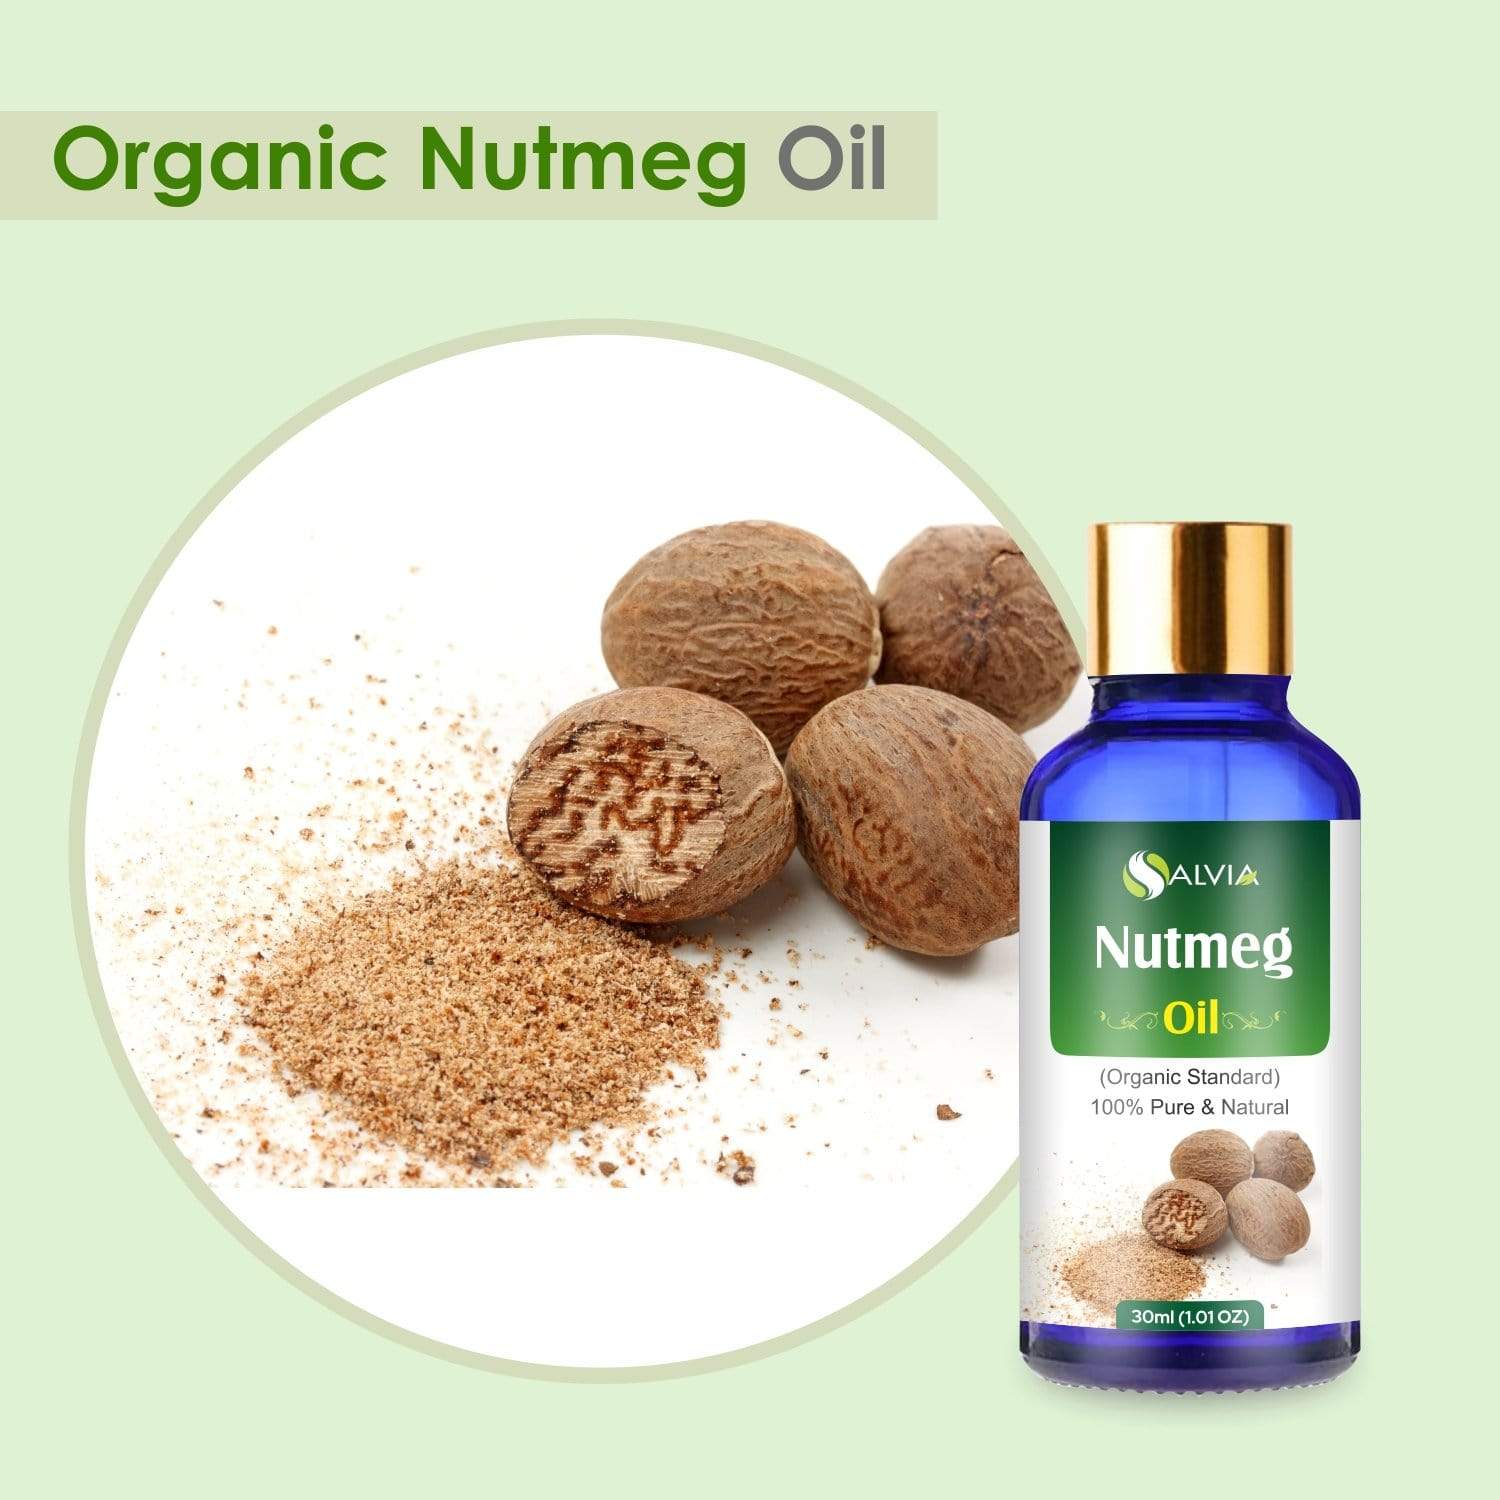 Organic Nutmeg Essential Oil benefits 